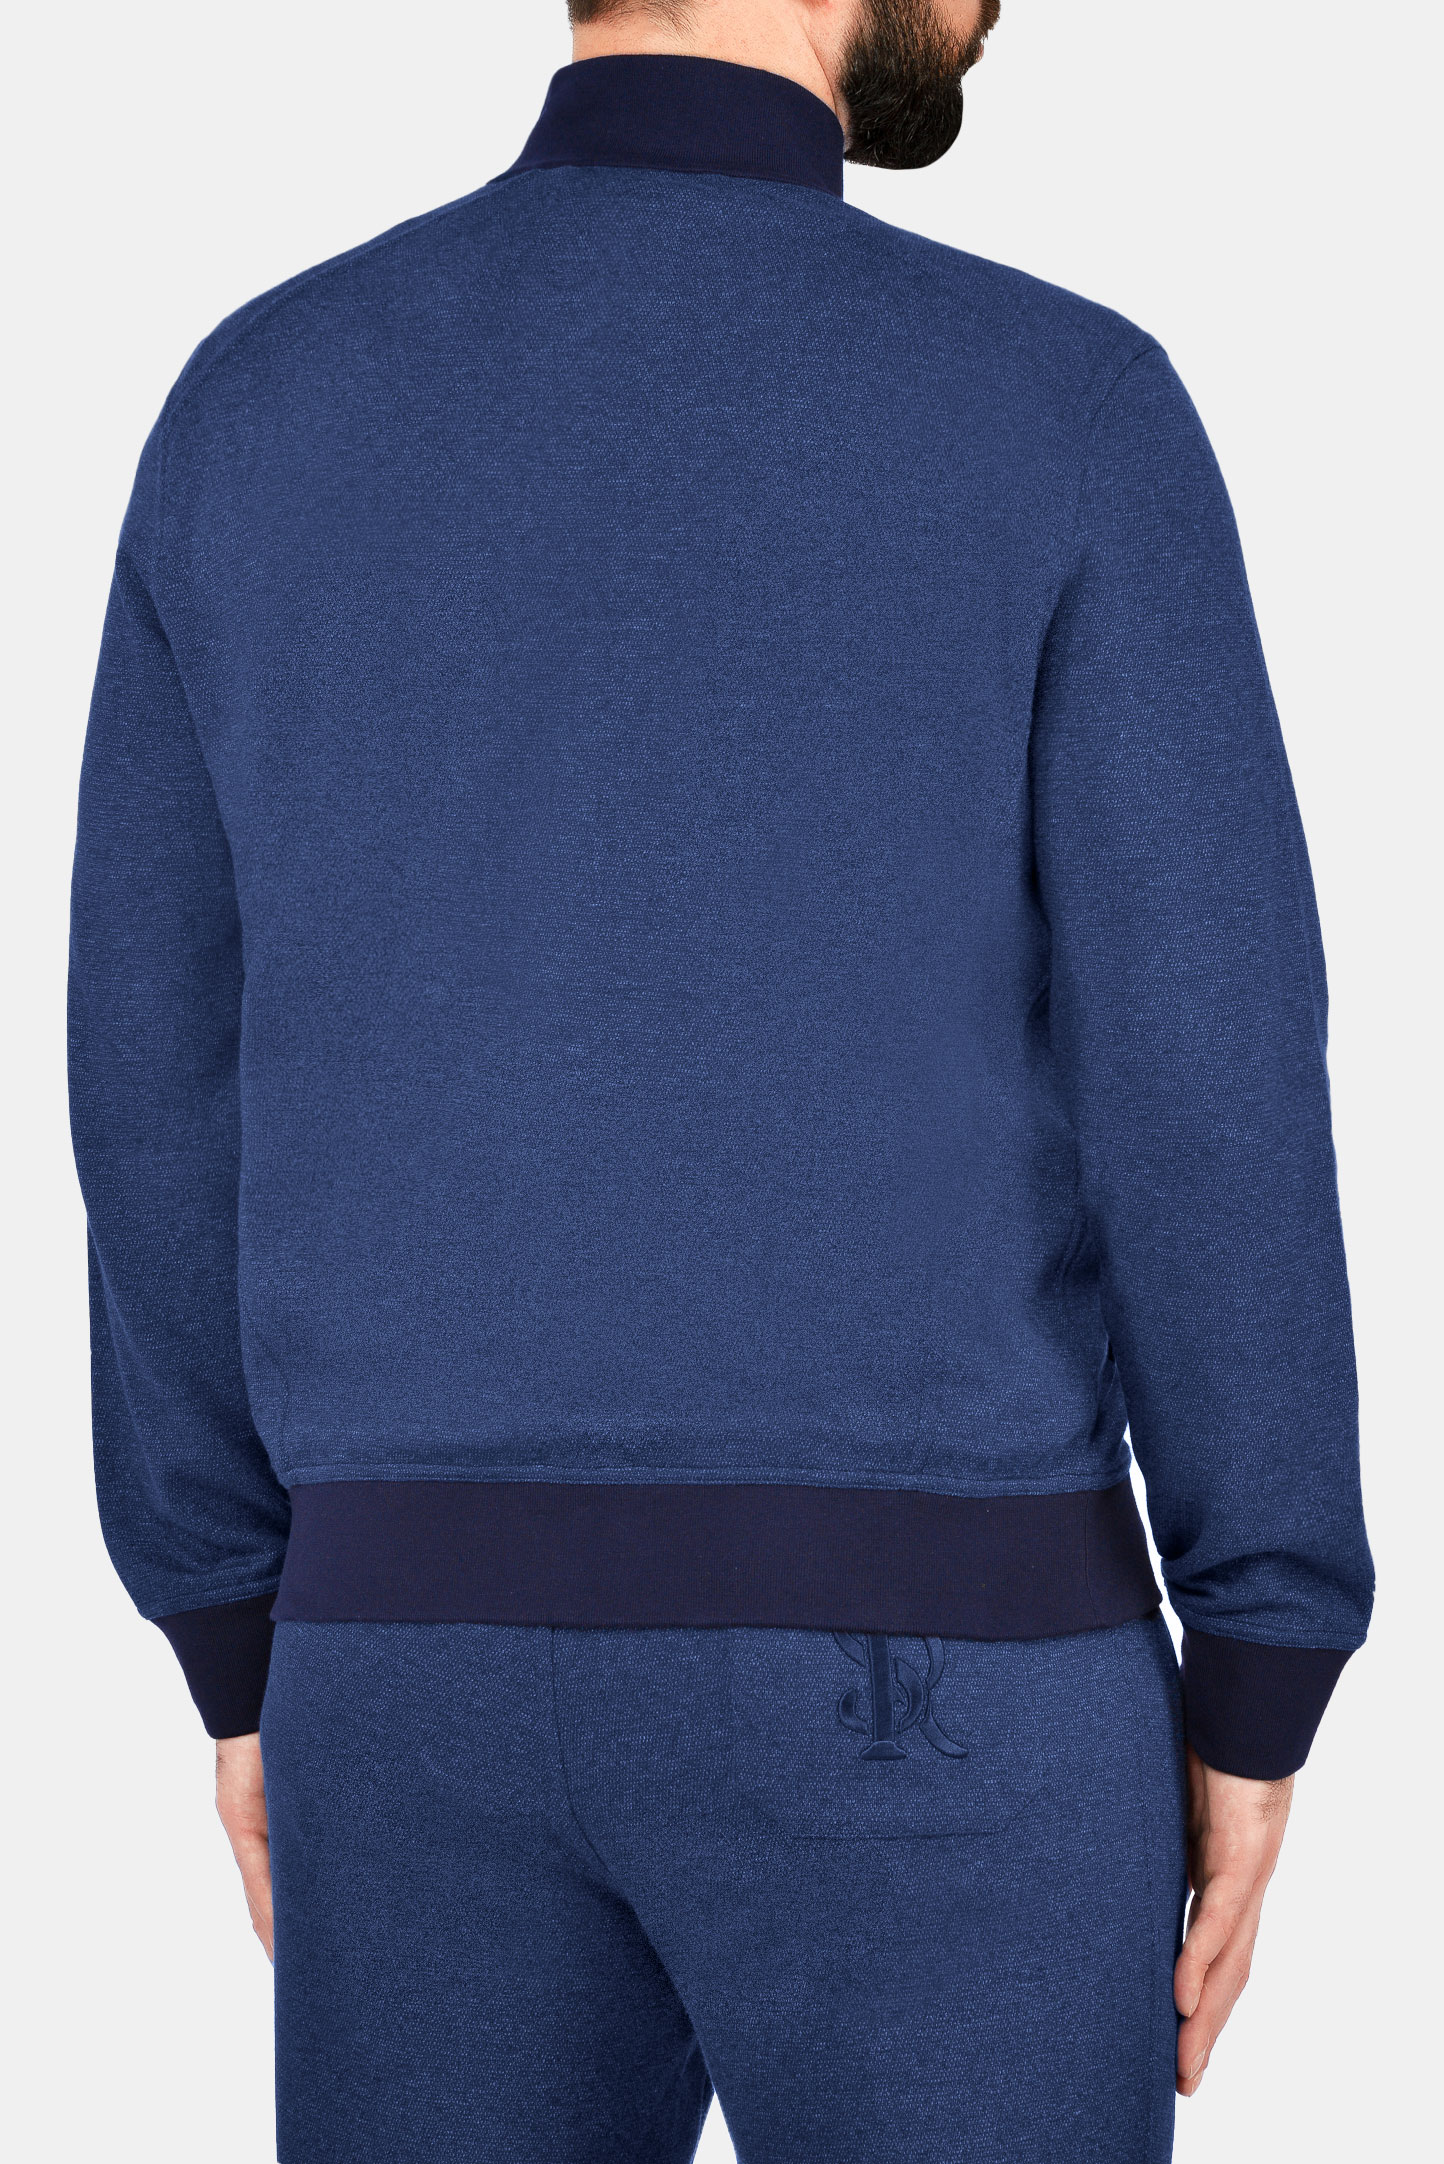 Куртка спорт STEFANO RICCI K919029R31 T21210, цвет: Синий, Мужской